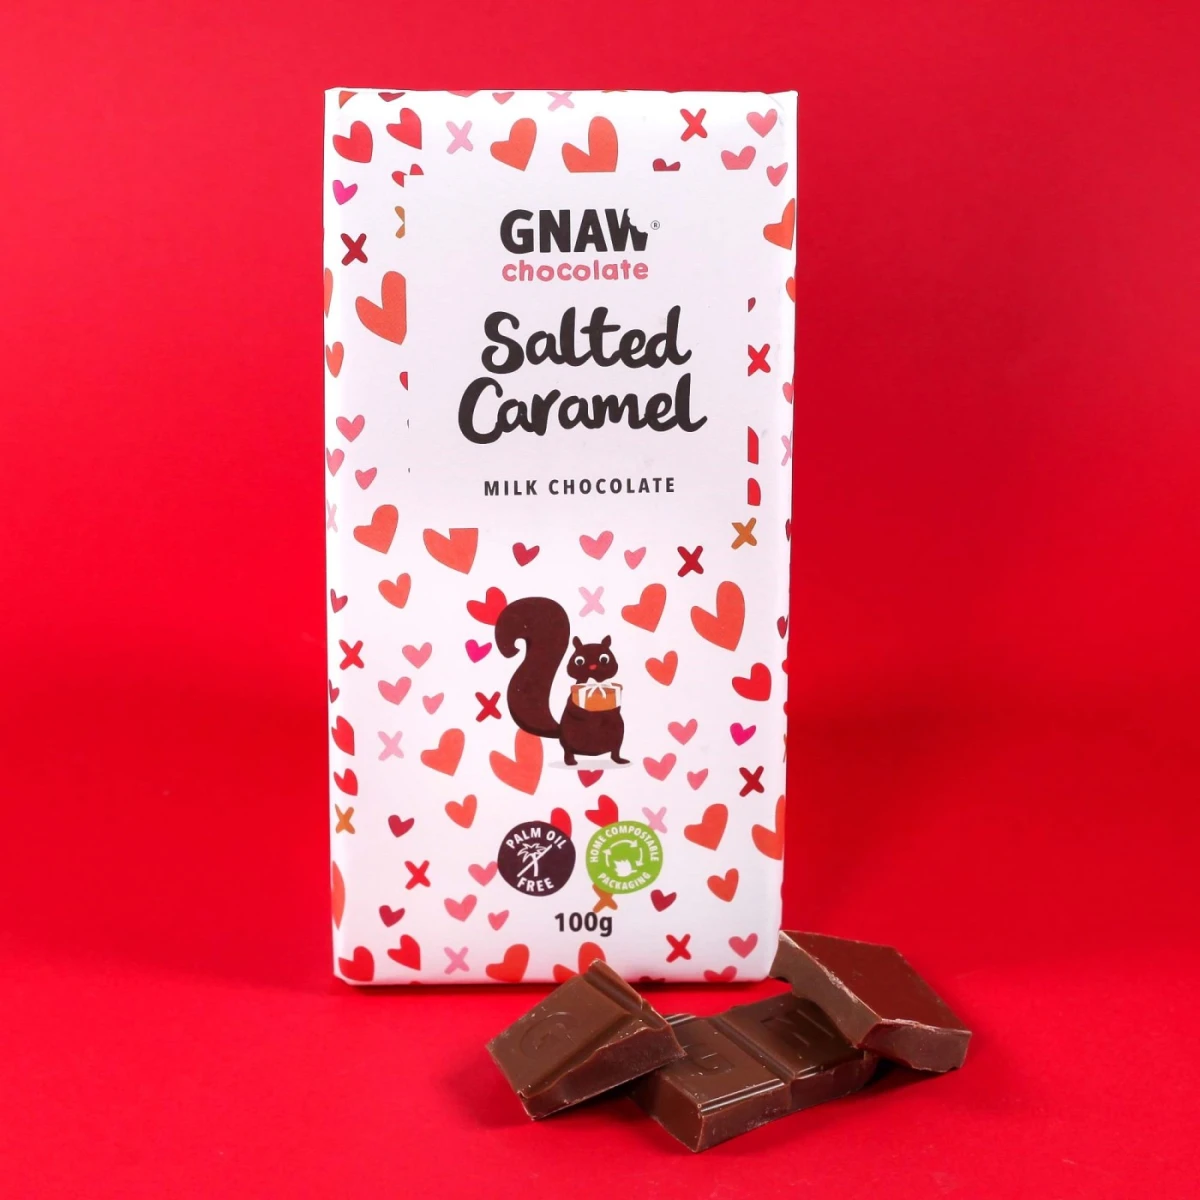 Gnaw - Salted Caramel Milk Chocolate